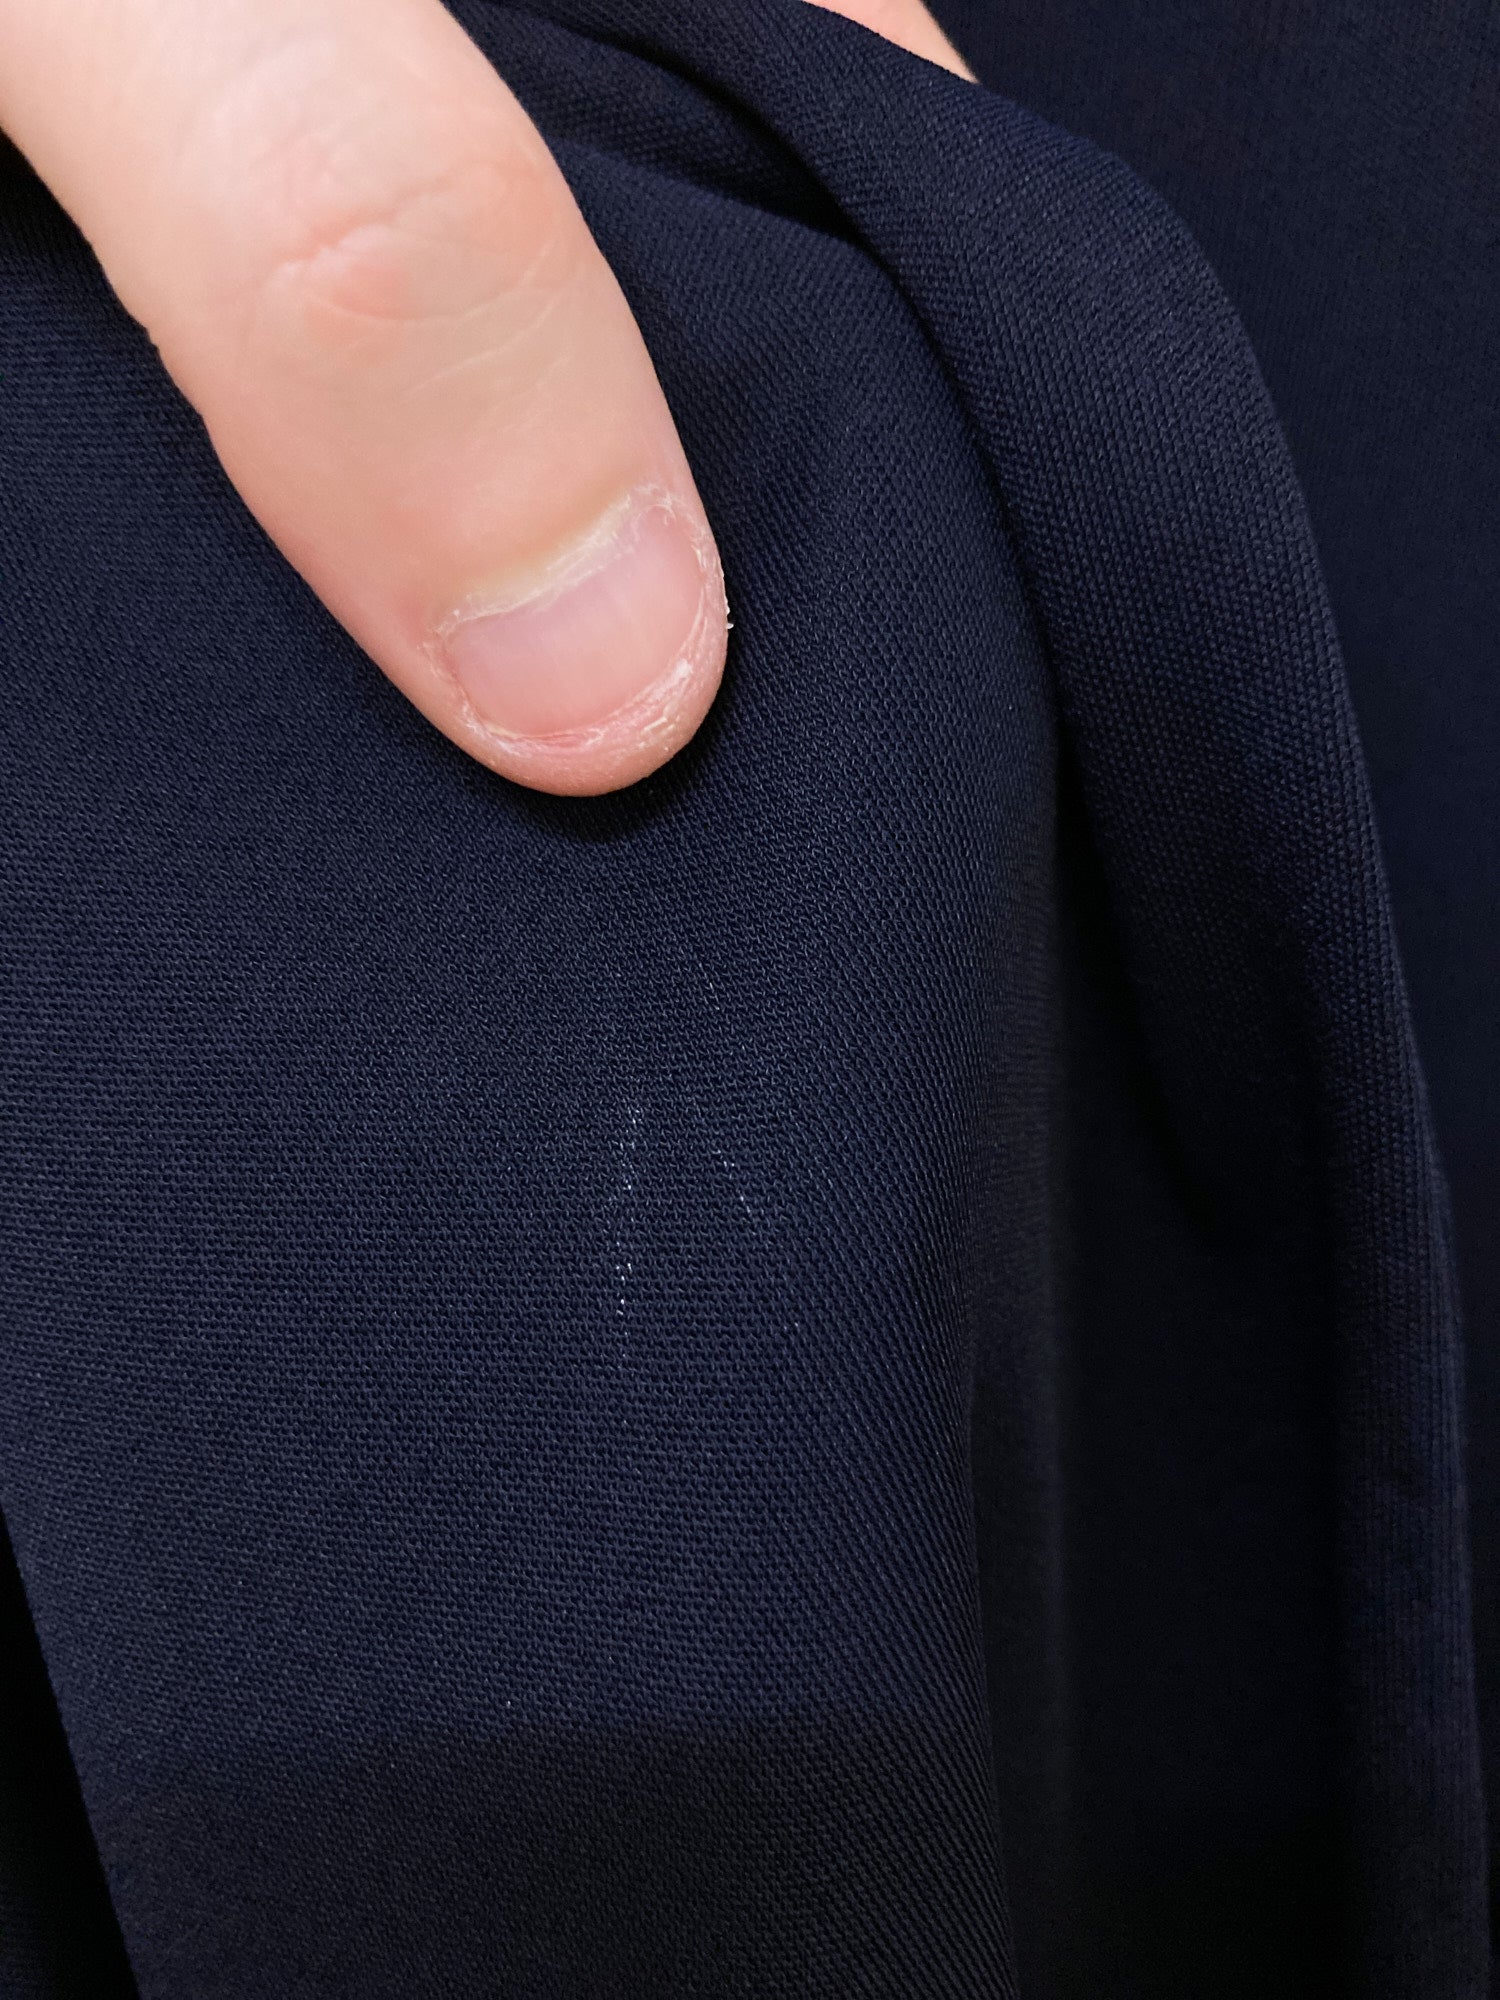 Robe de Chambre Comme des Garcons 1992 dark navy three button knit coat